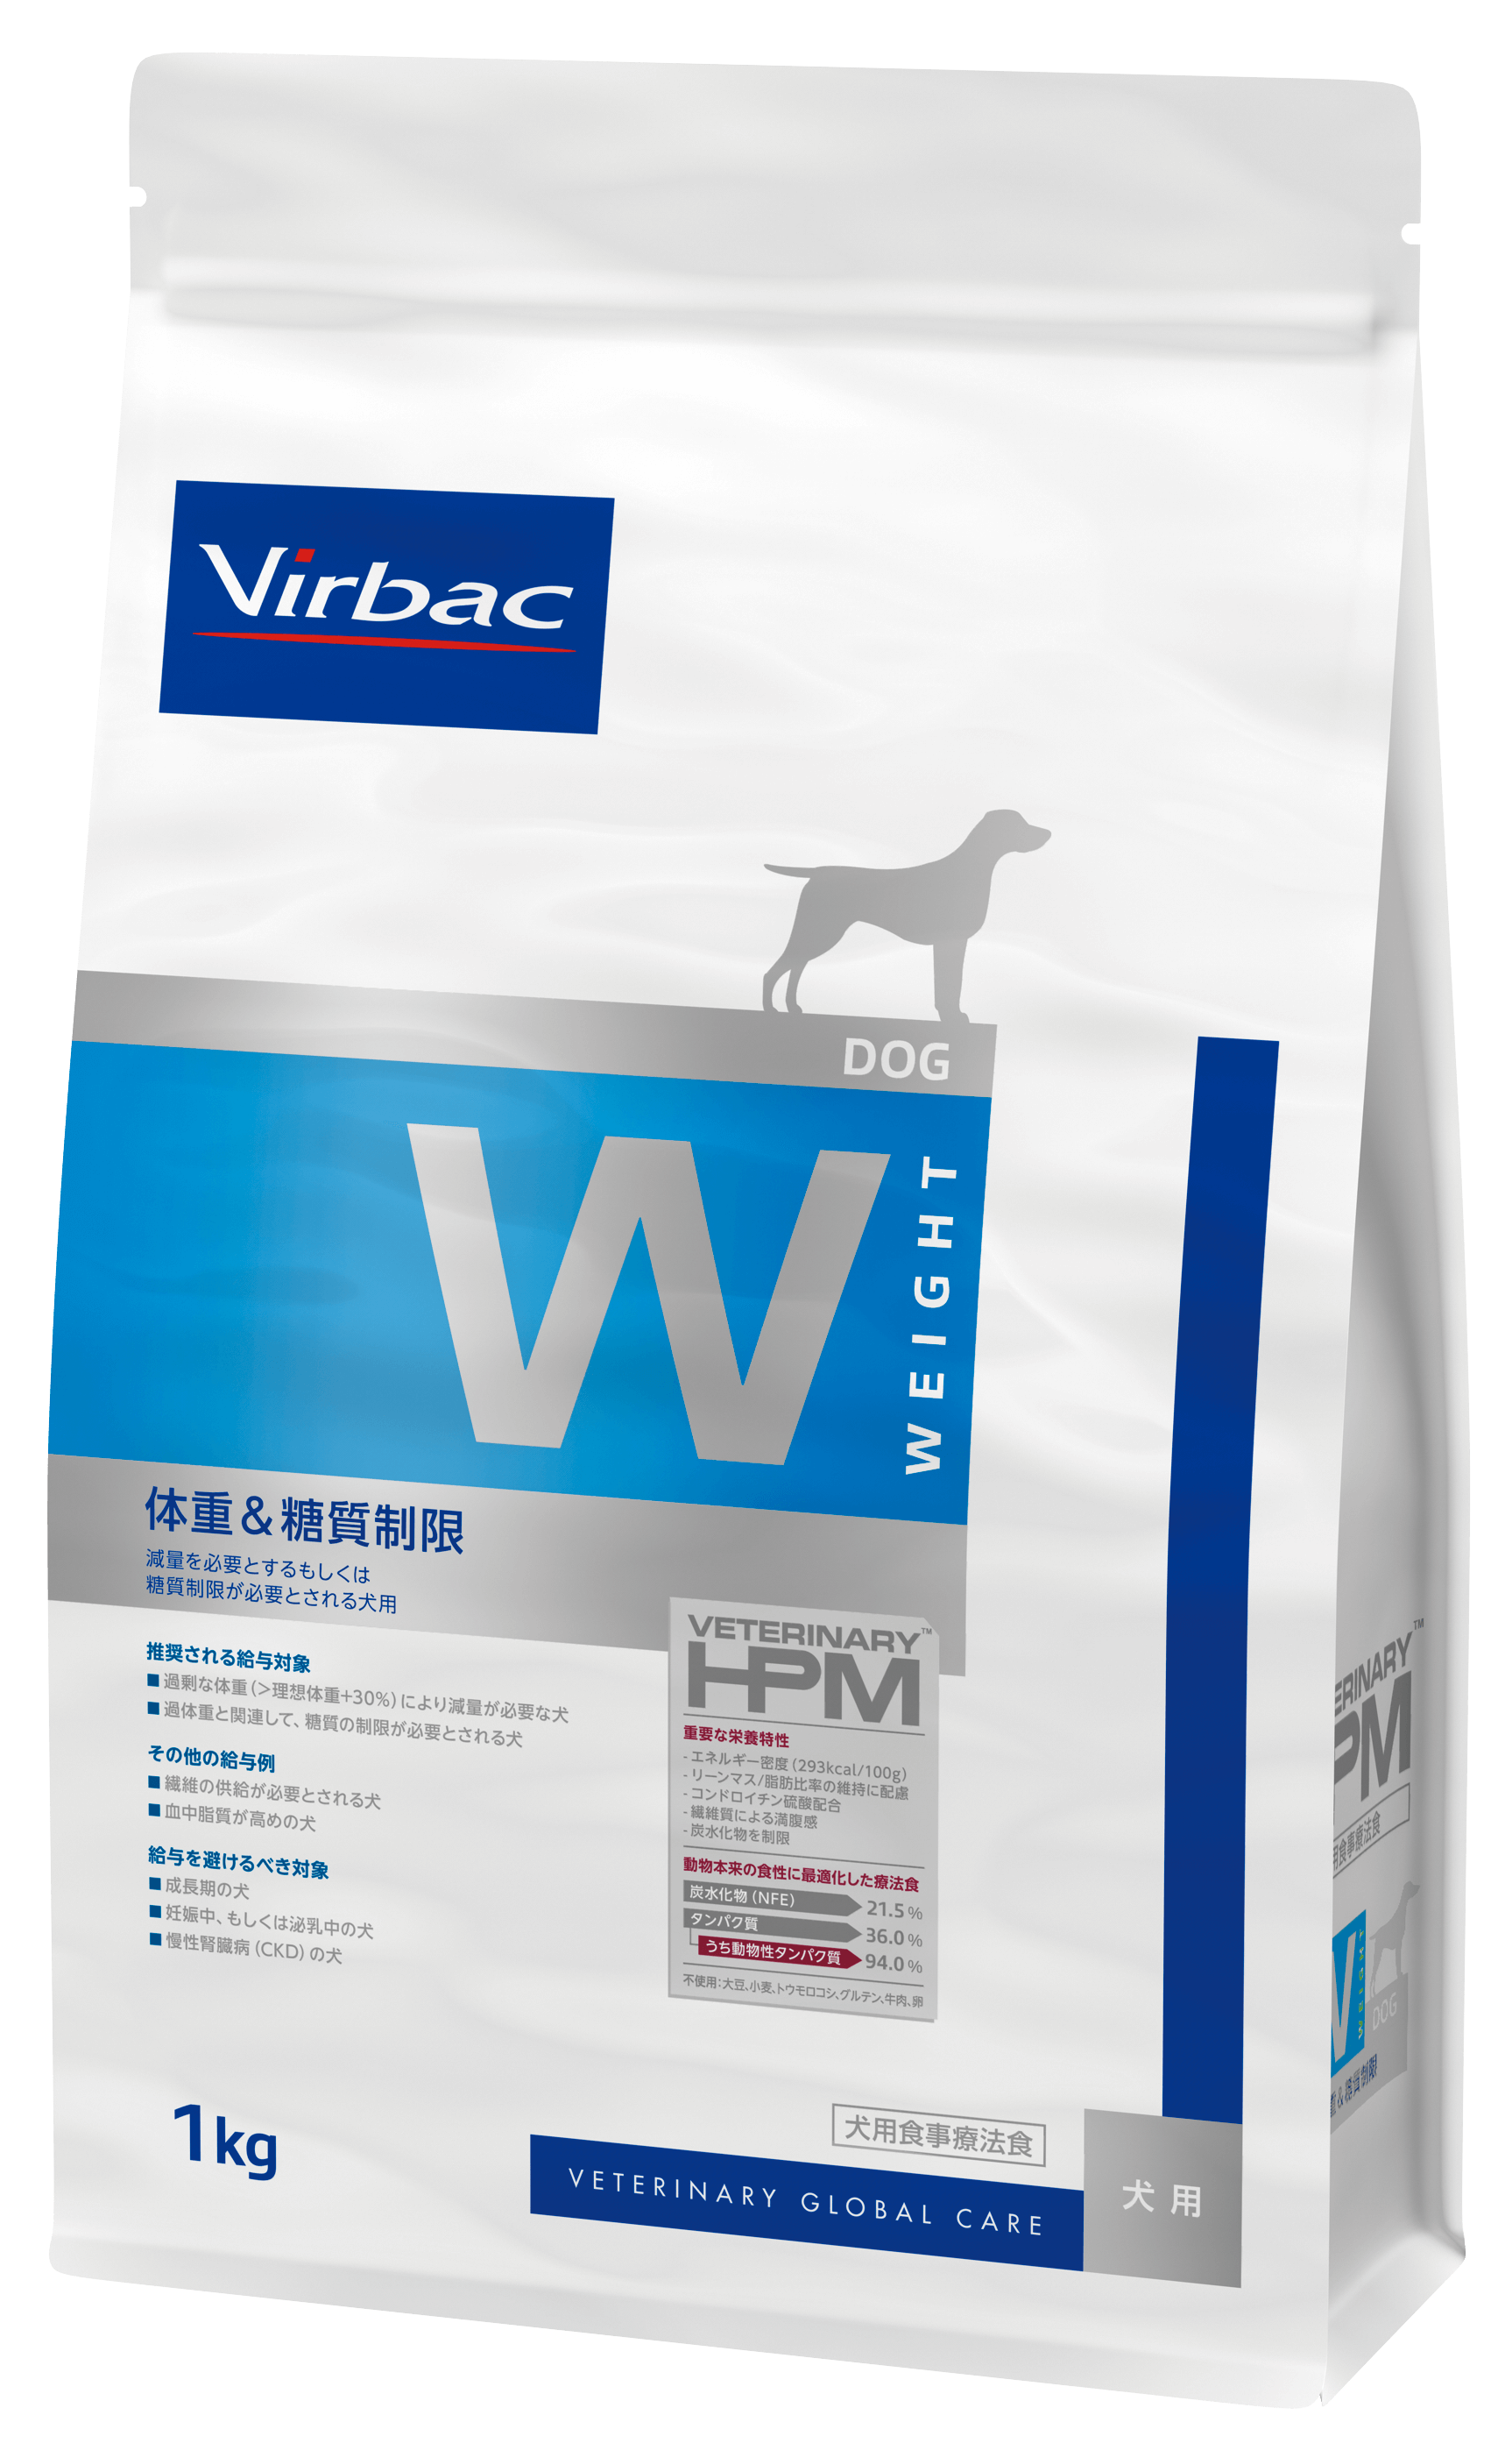 Veterinary Hpm 犬用 体重 糖質制限 1 ビルバック公式通販サイト